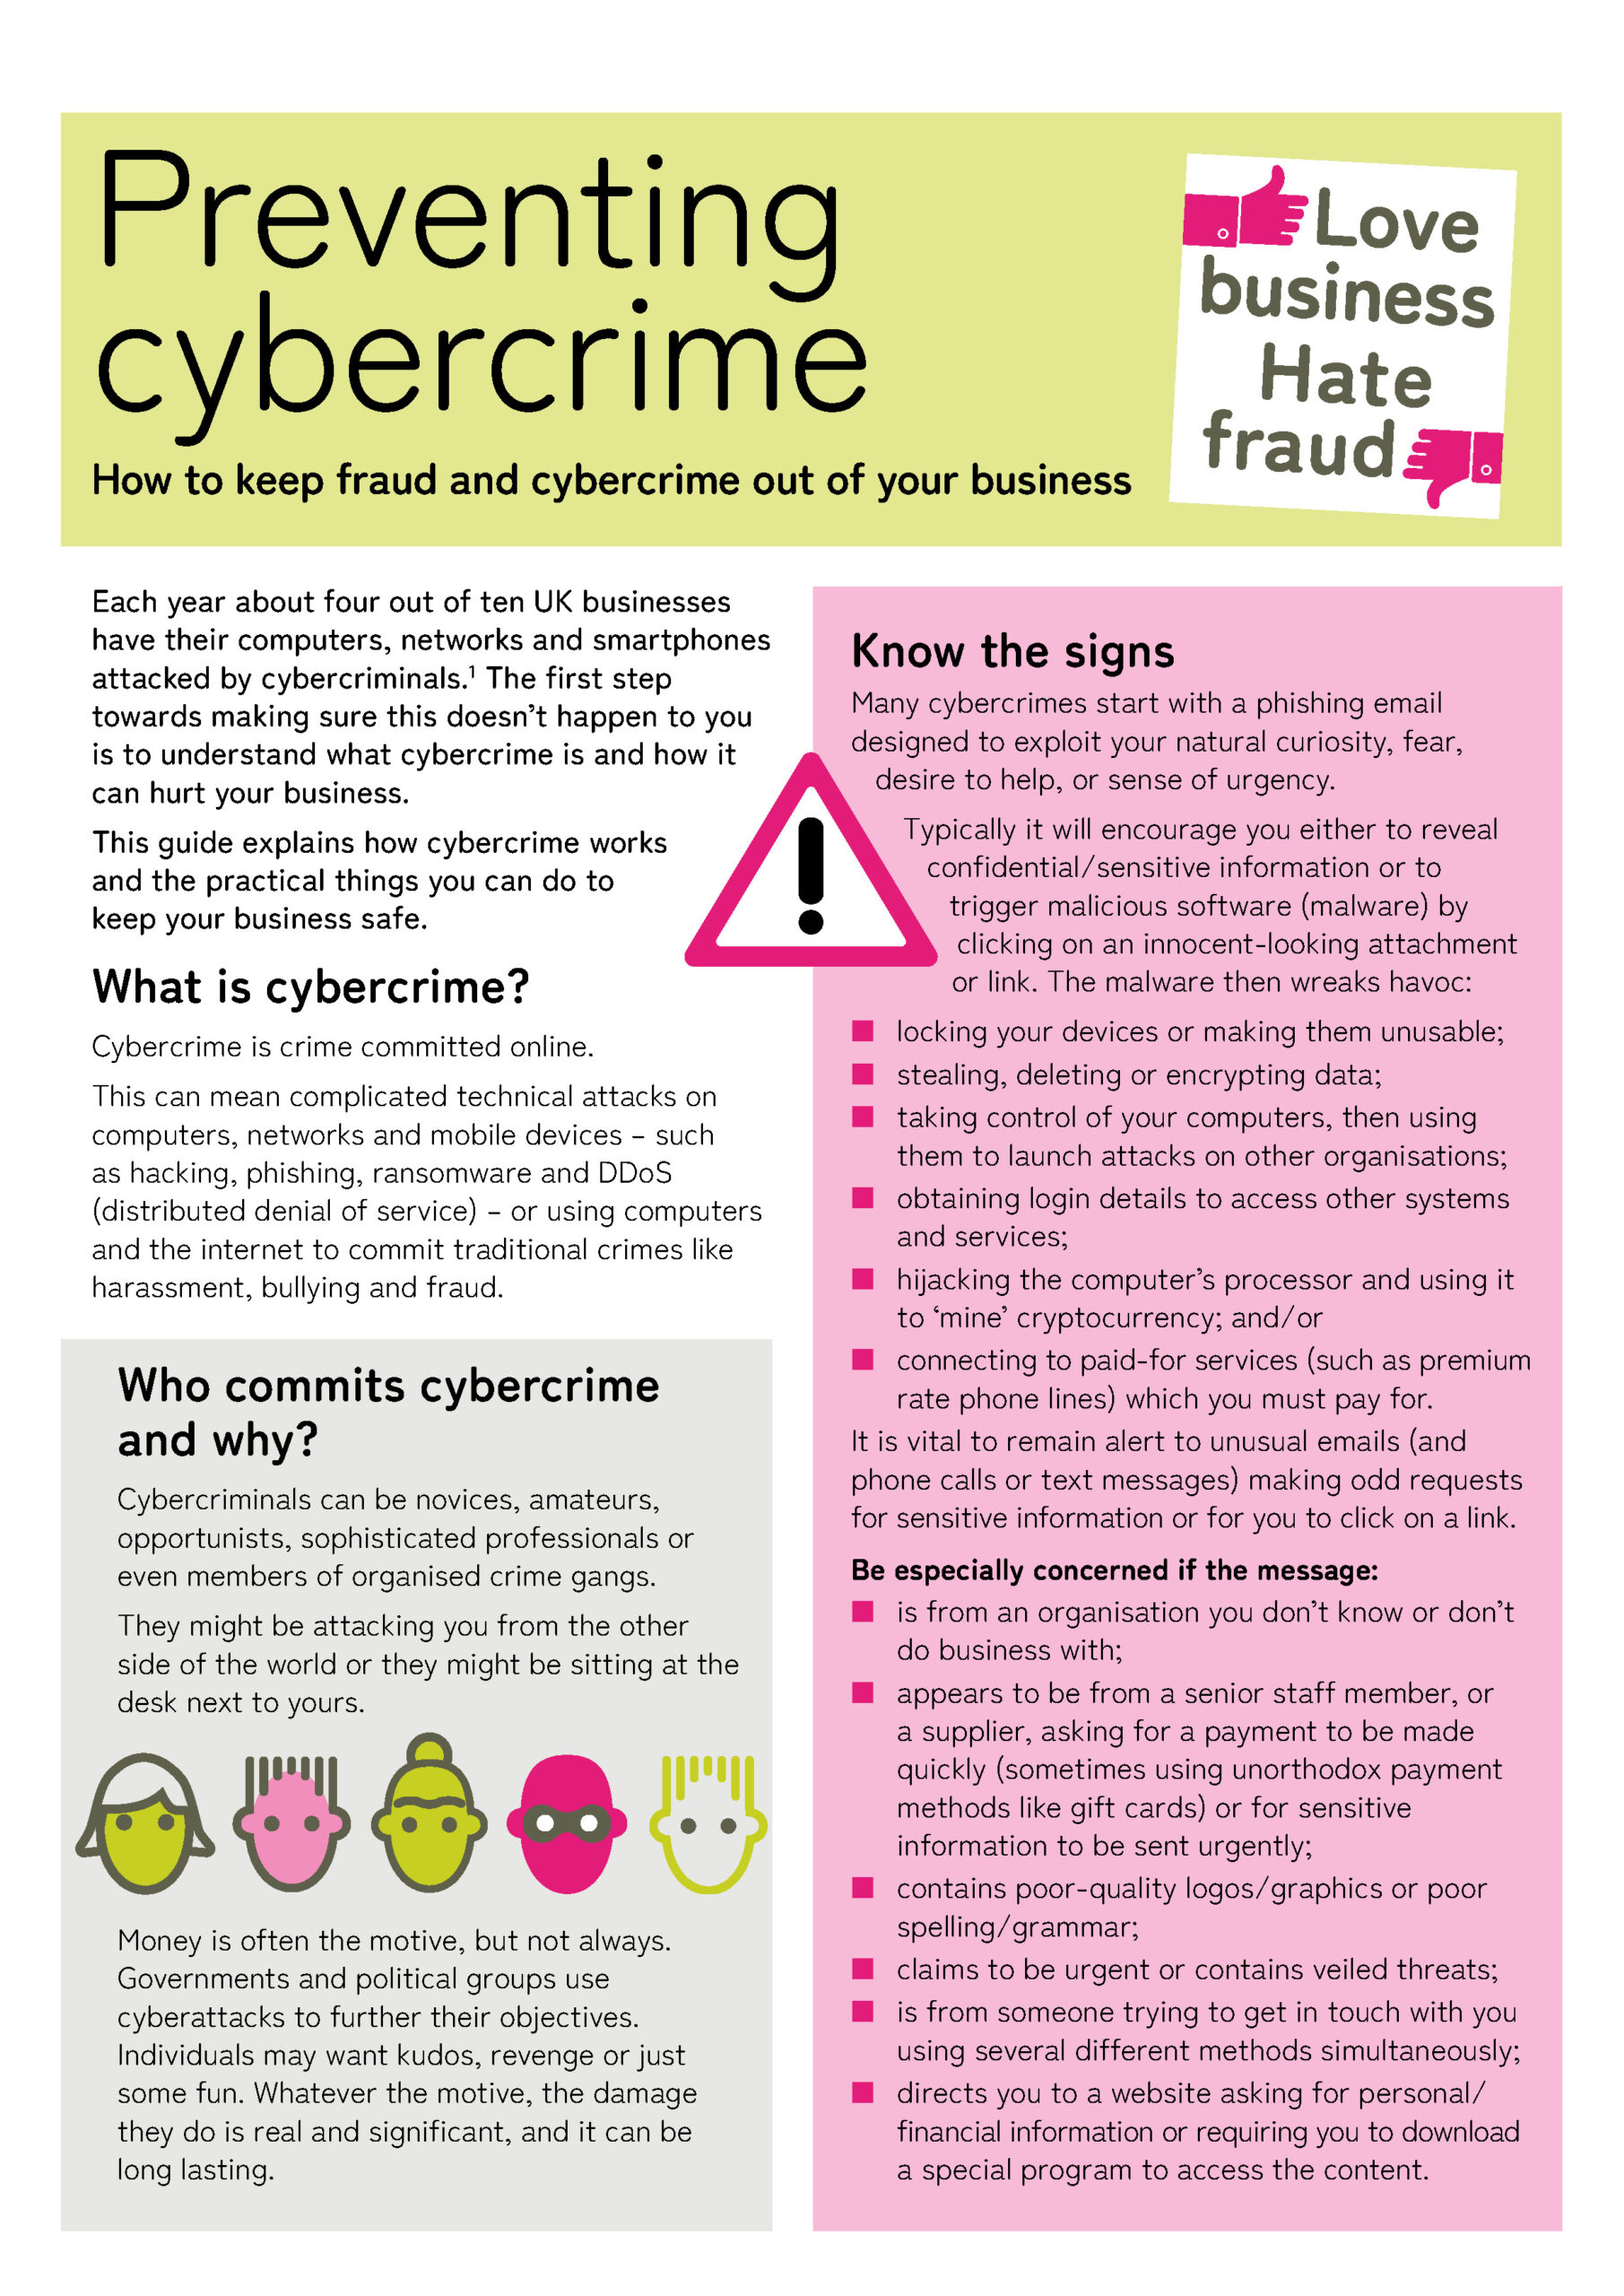 Preventing Cybercrime (Full Guide)